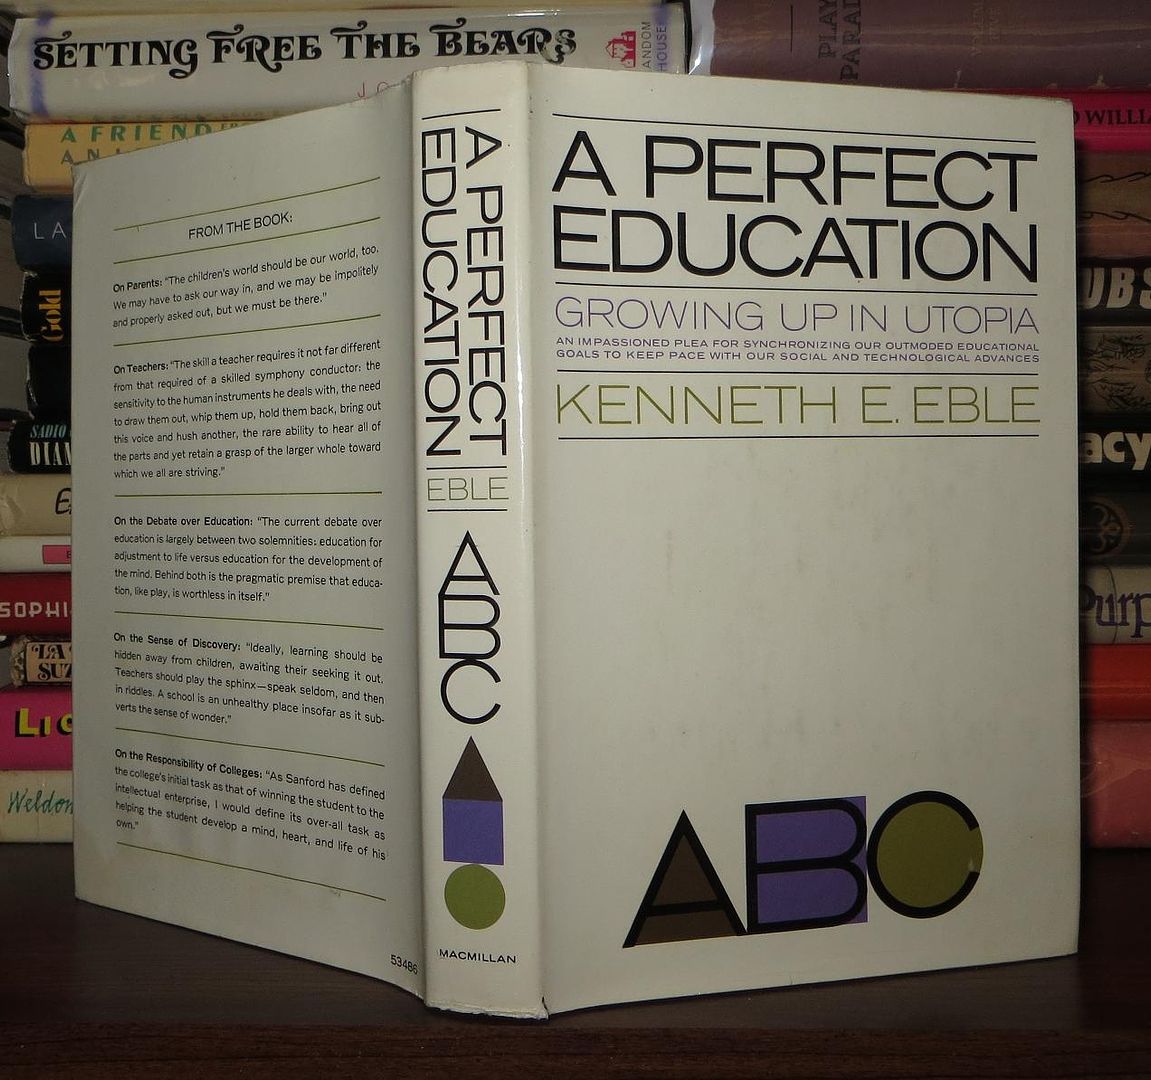 EBLE, KENNETH E. - A Perfect Education